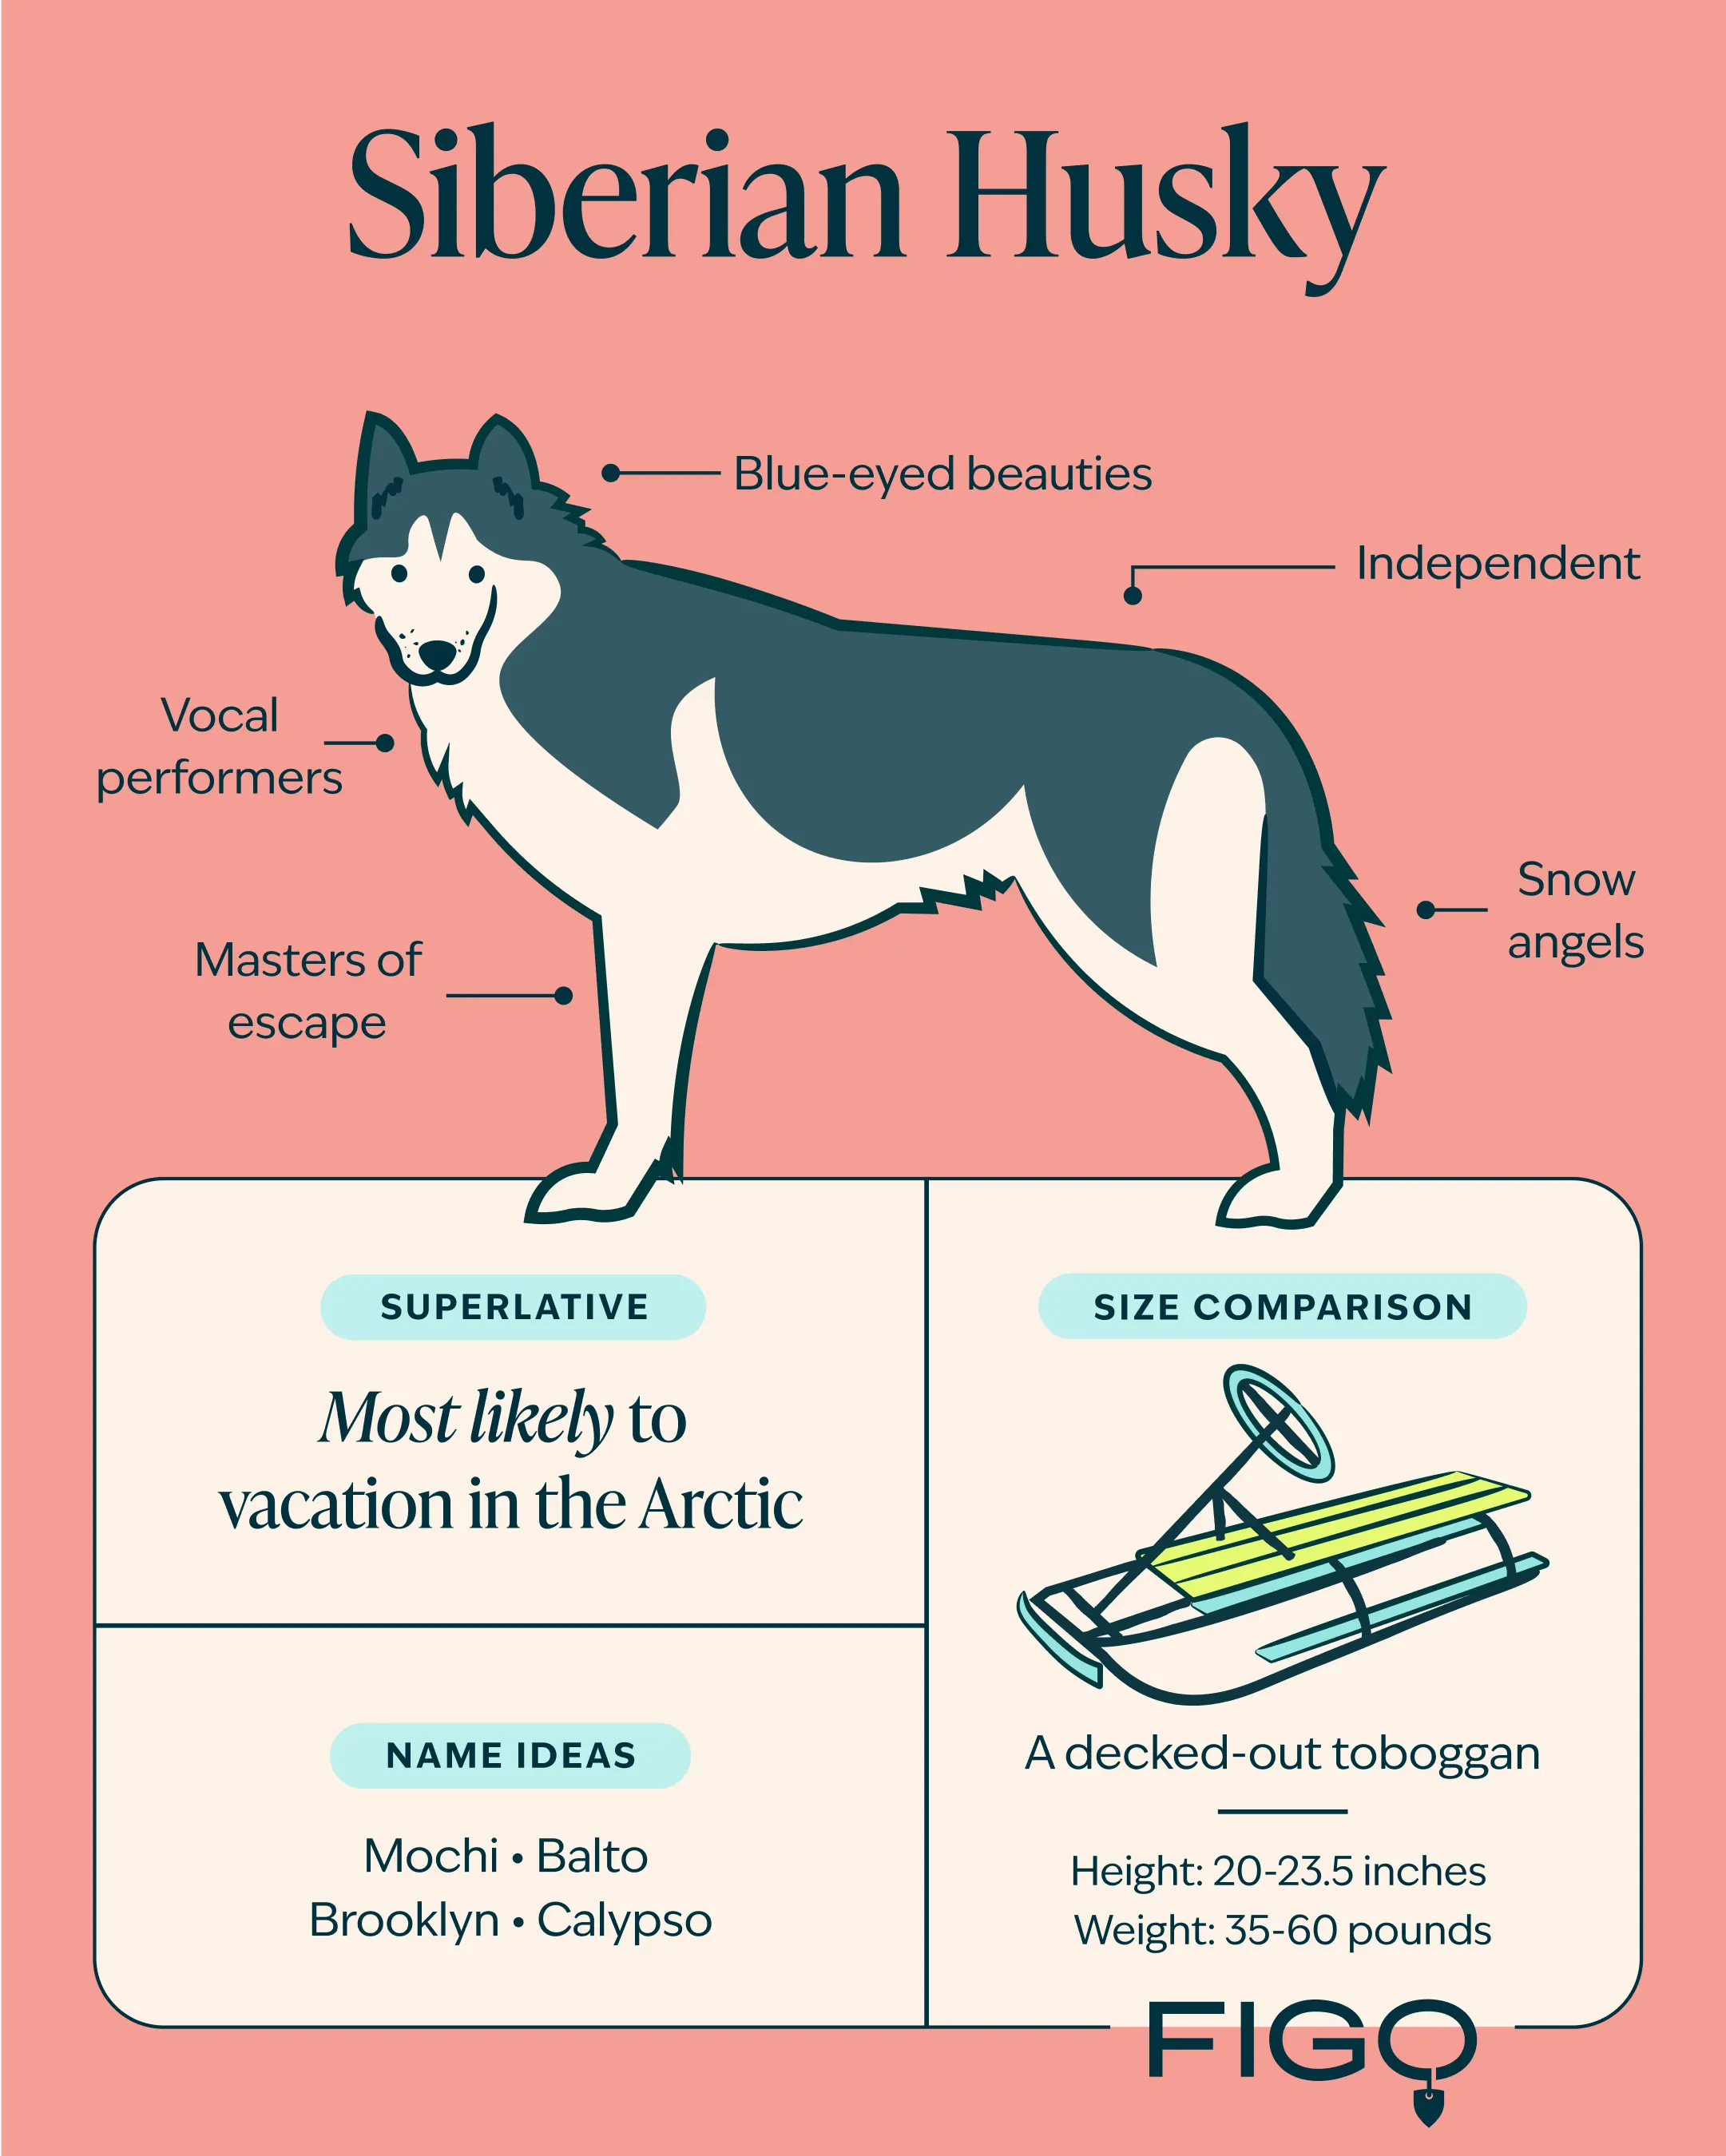 Siberian Husky Breed Guide Image